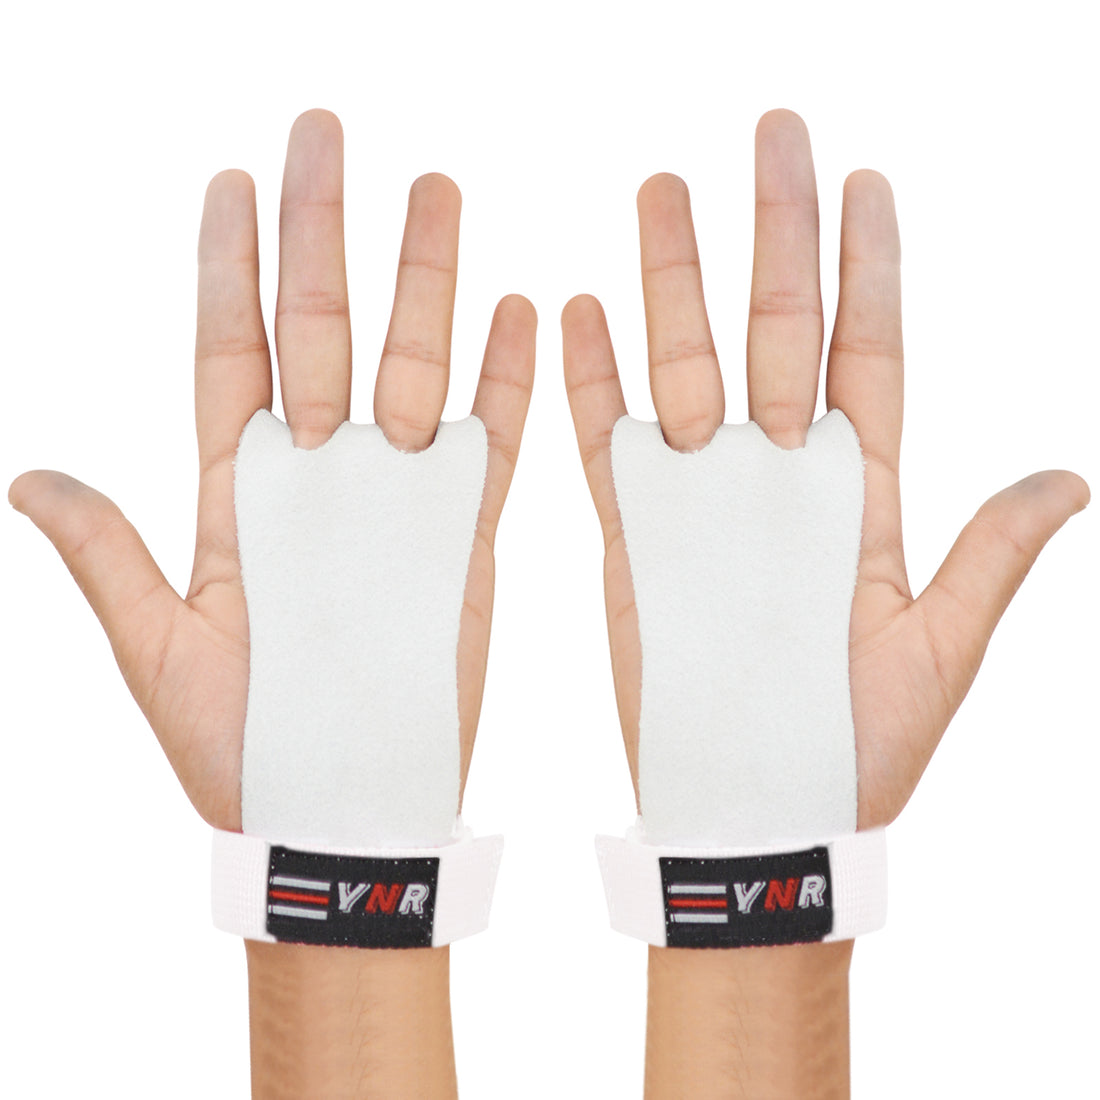 YNR Gymnastics Palm Hand Guards | Children's Beginner Grips | YNR Sports Fitness